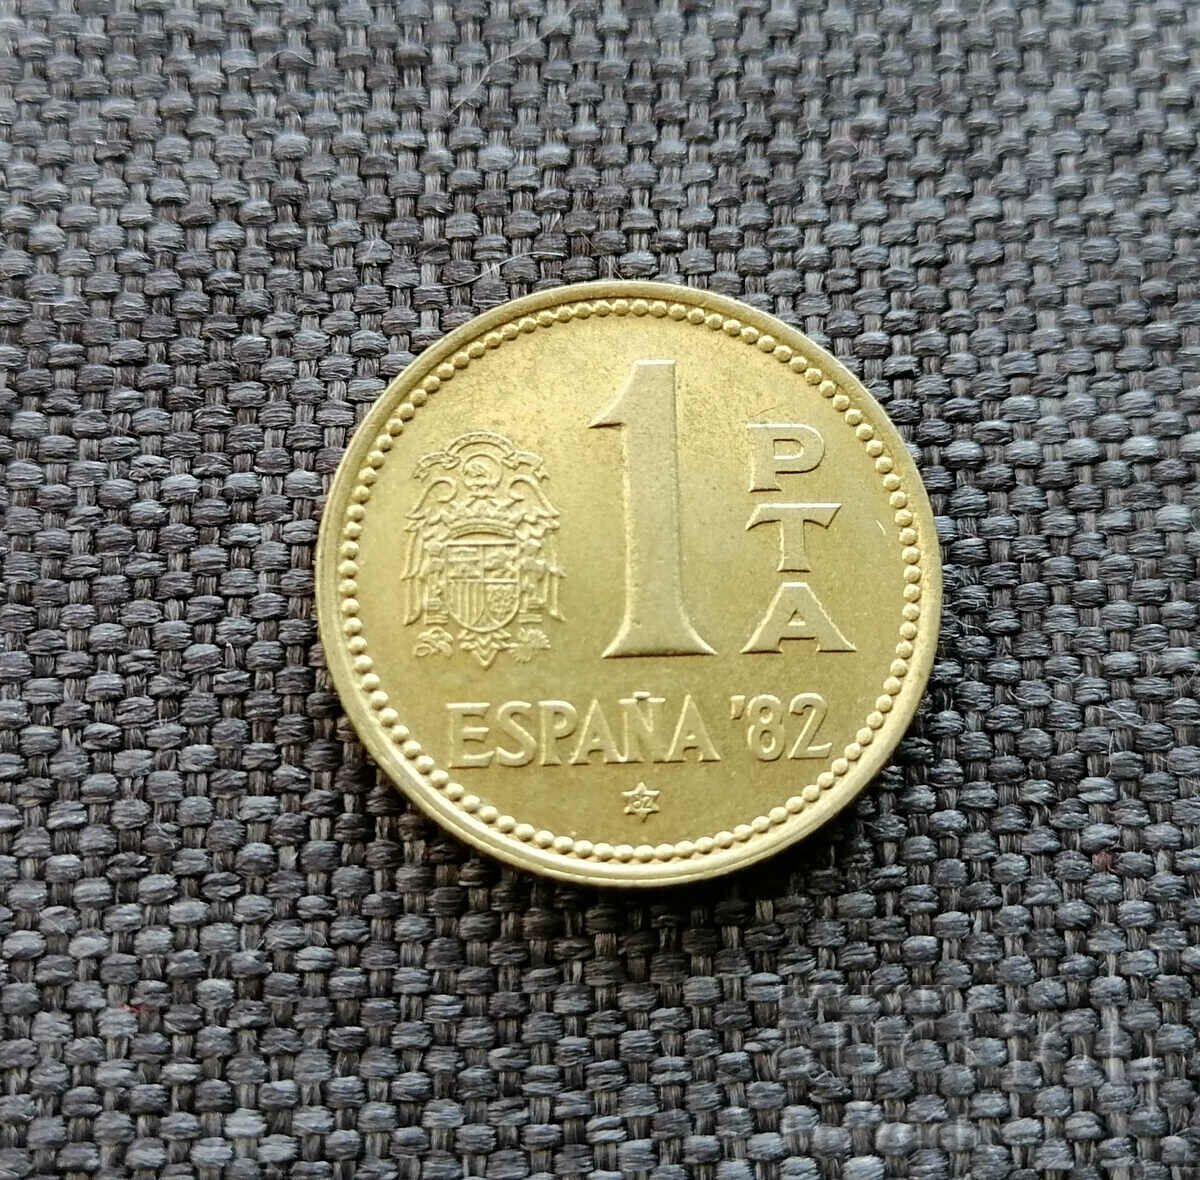 ❤️ ⭐ Spania 1980 1 peseta ⭐ ❤️